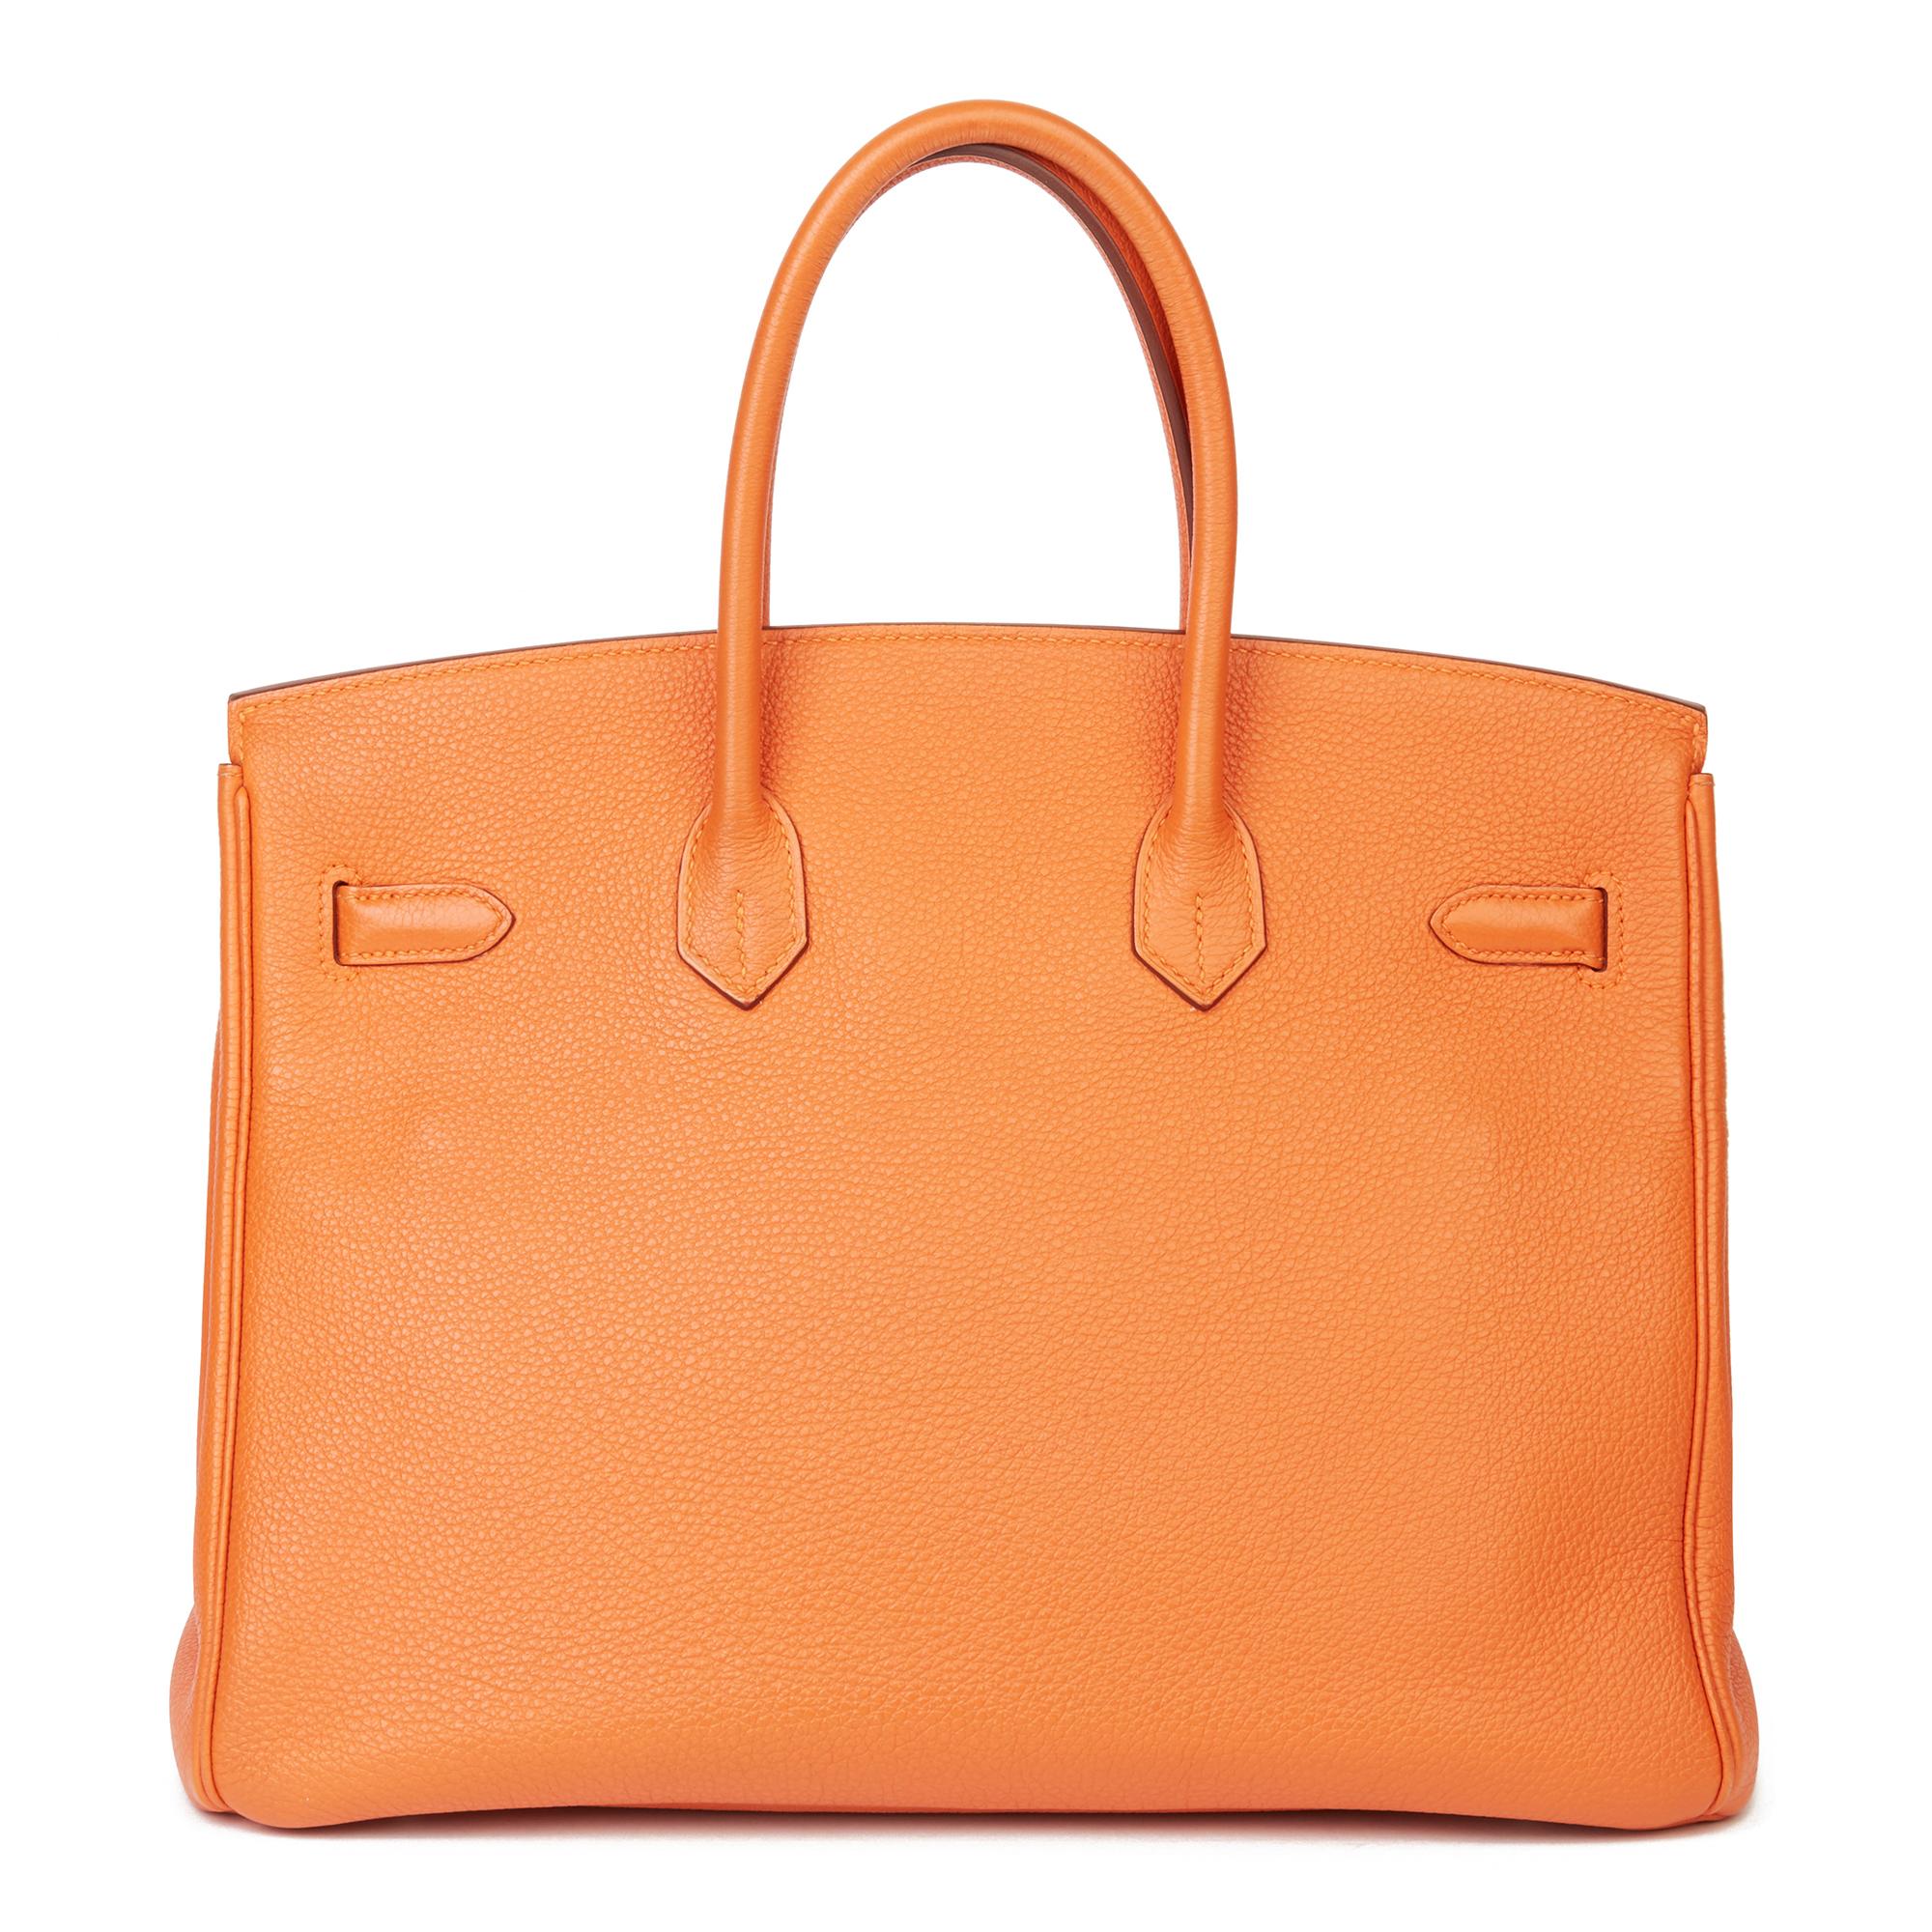 2011 Hermès Orange H Togo Leather Birkin 35cm 1